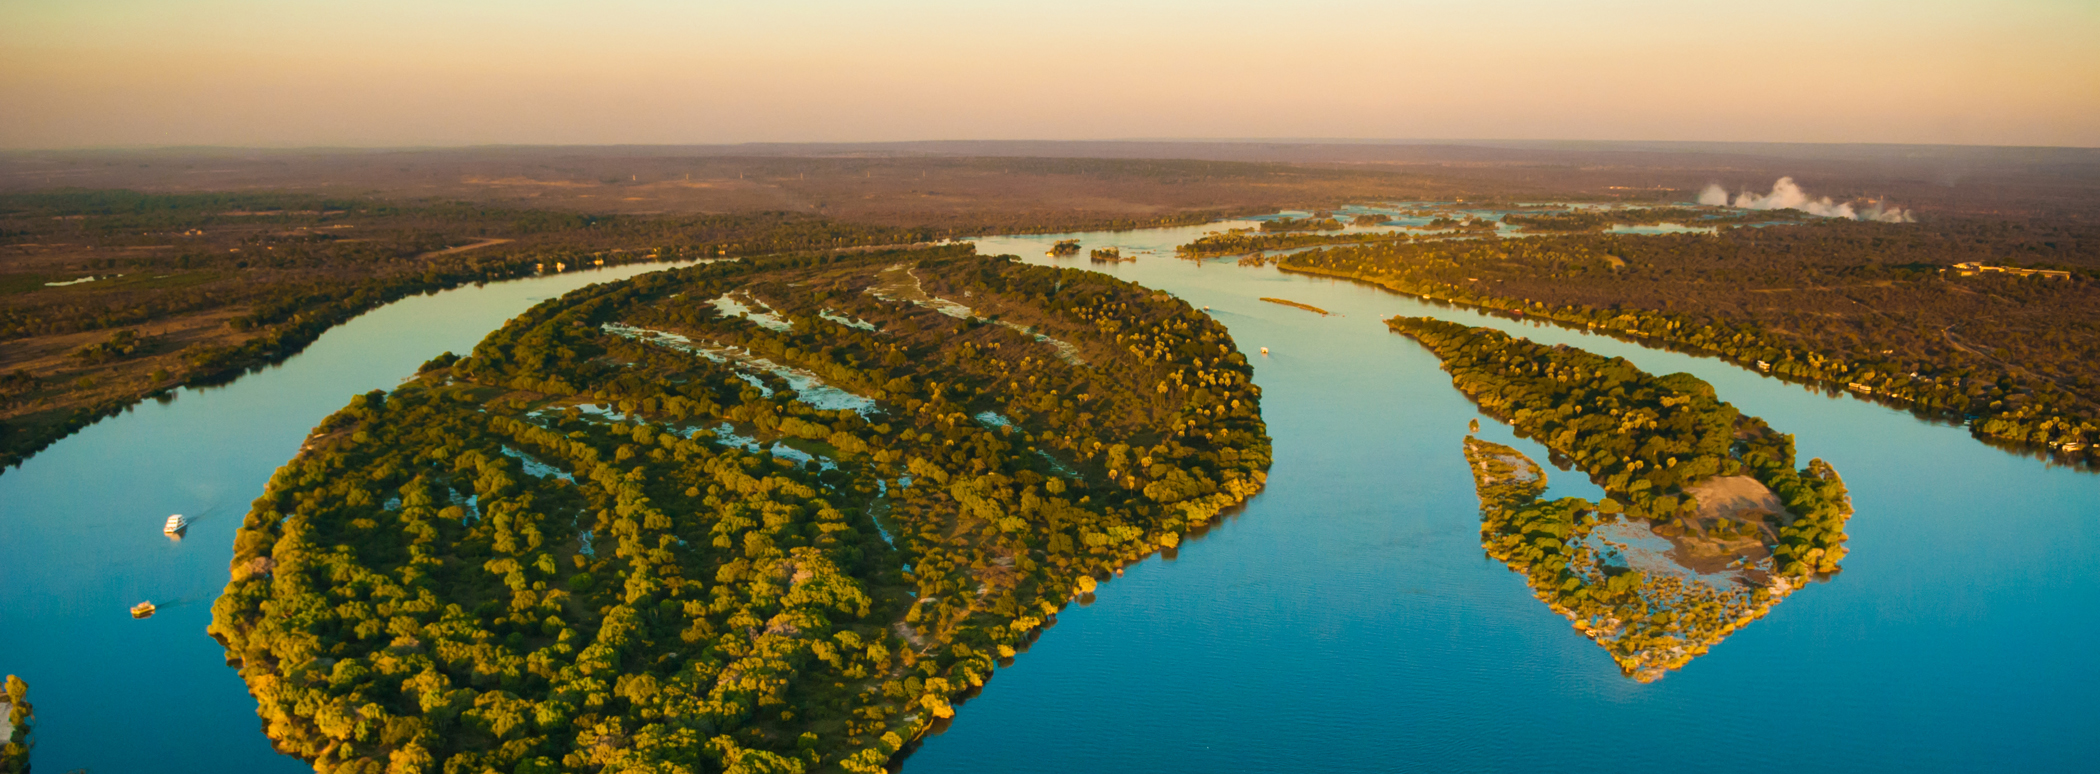 Zambezi river from the air